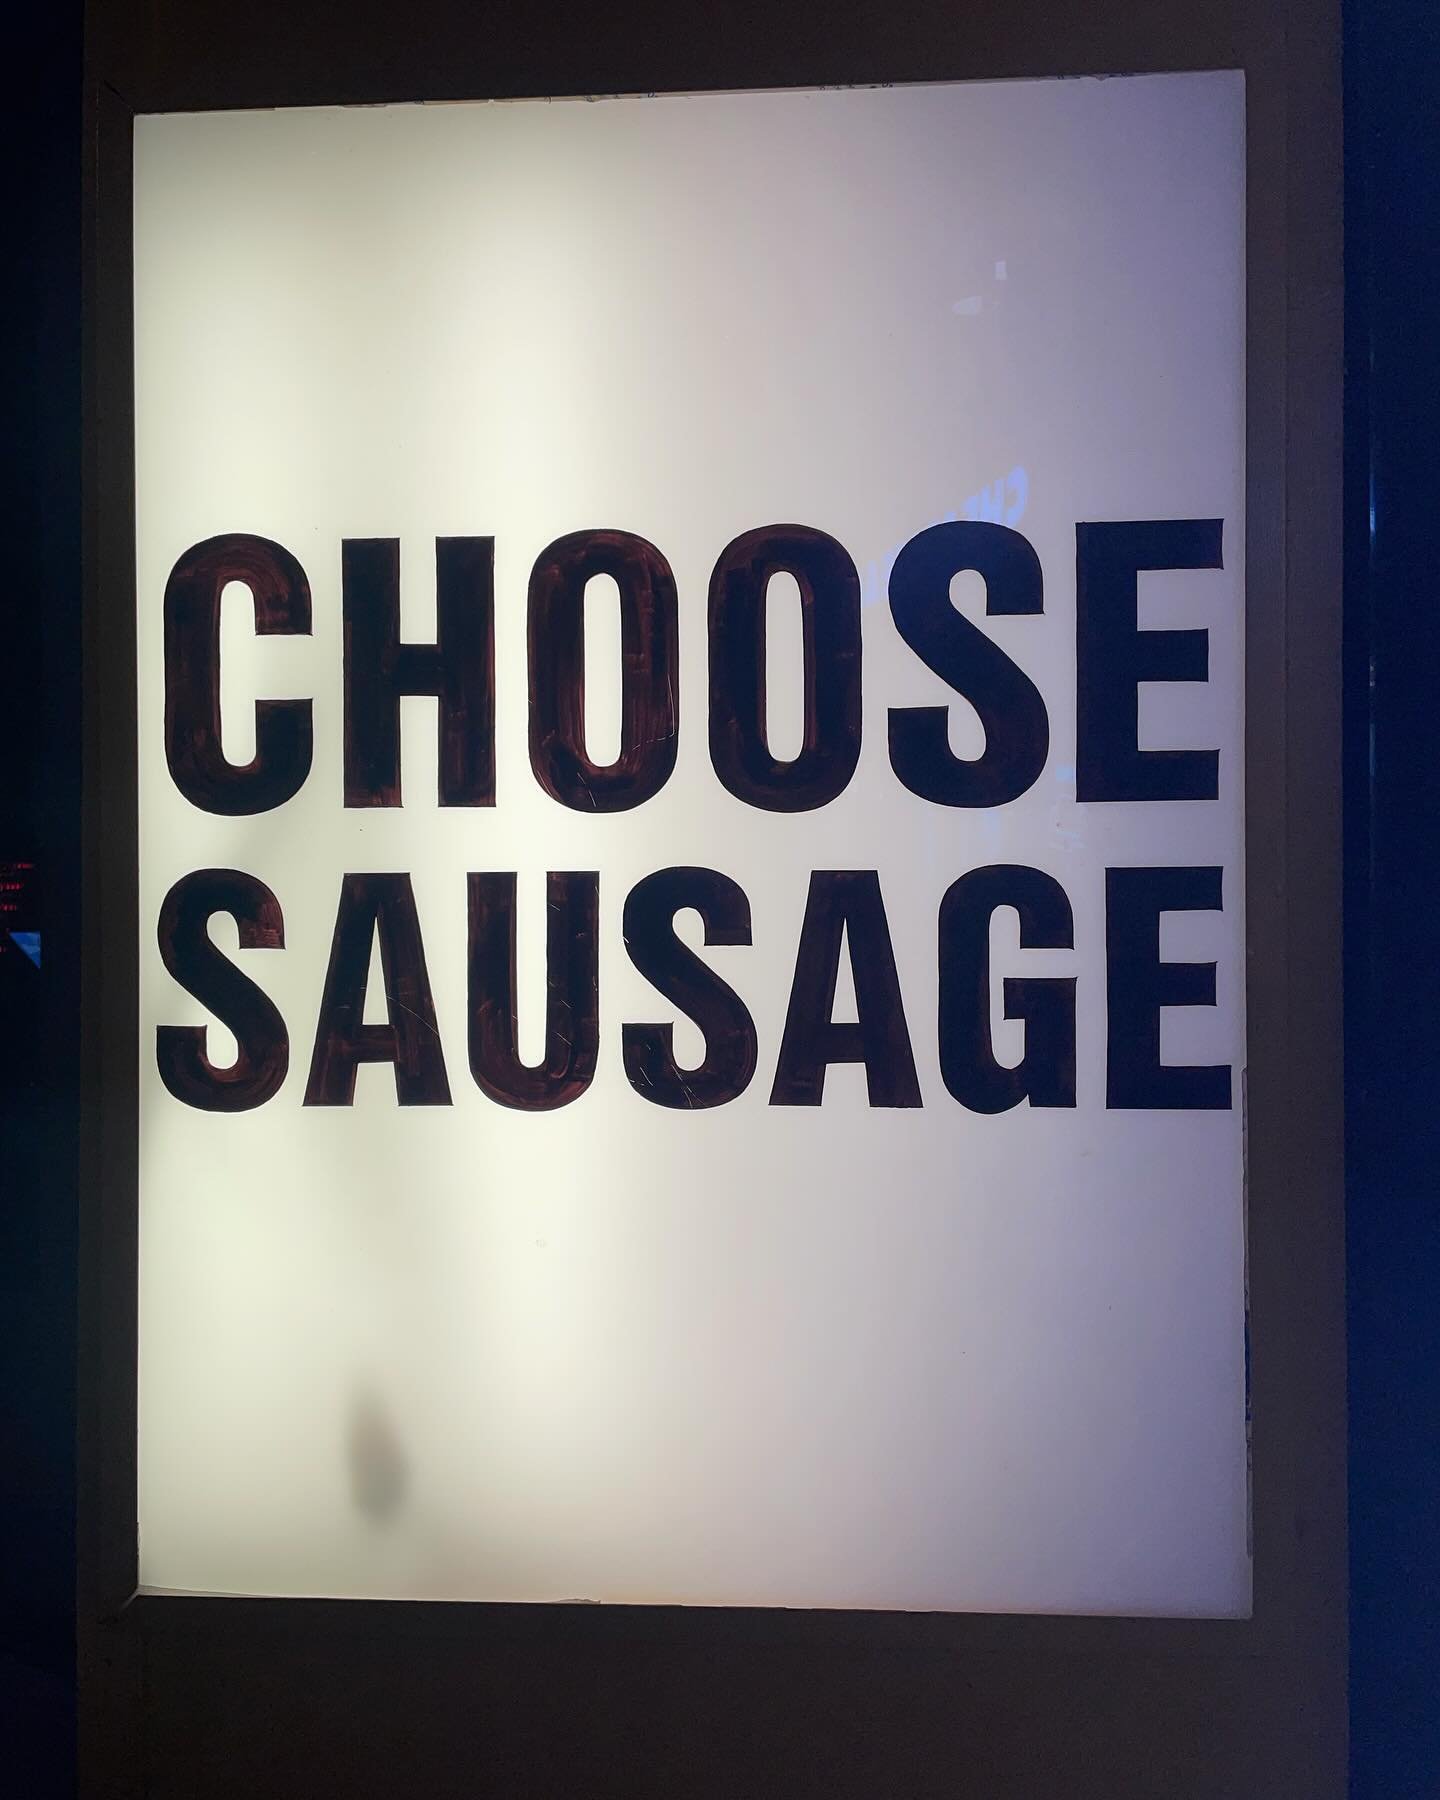 Love a bit of sausage!